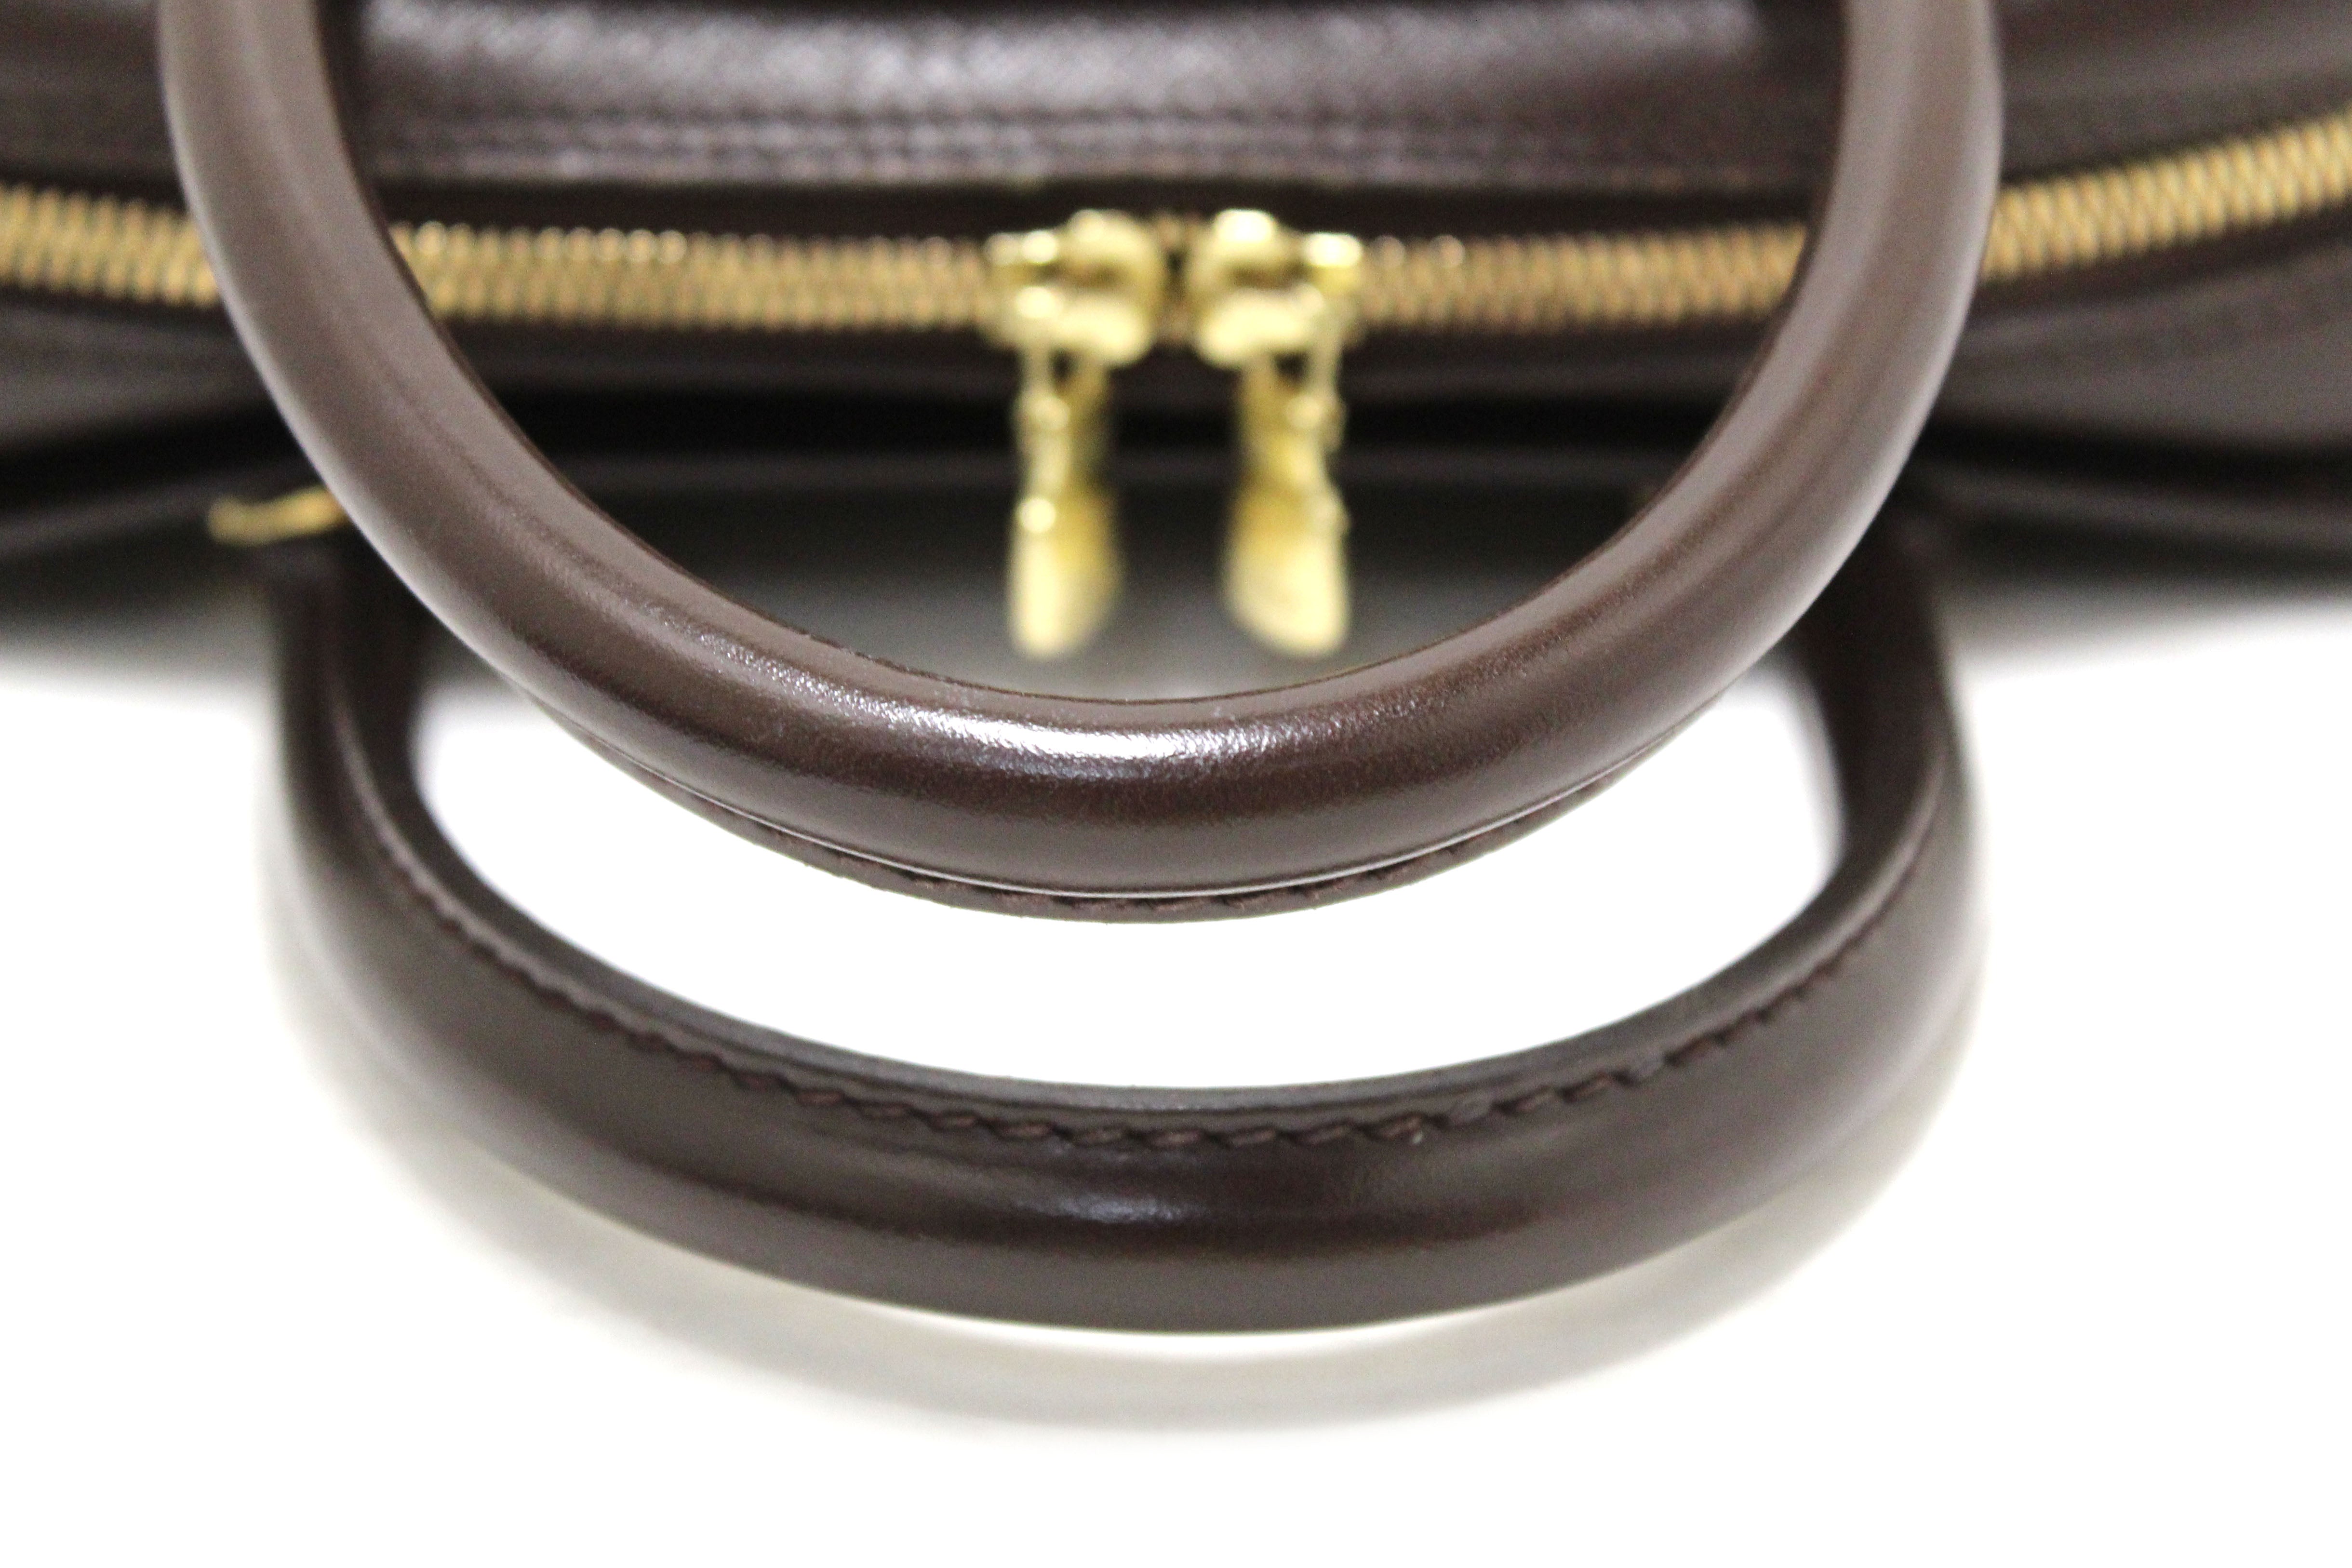 Louis Vuitton Damier Ebene Triana Bag w/ Strap - Brown Satchels, Handbags -  LOU86551